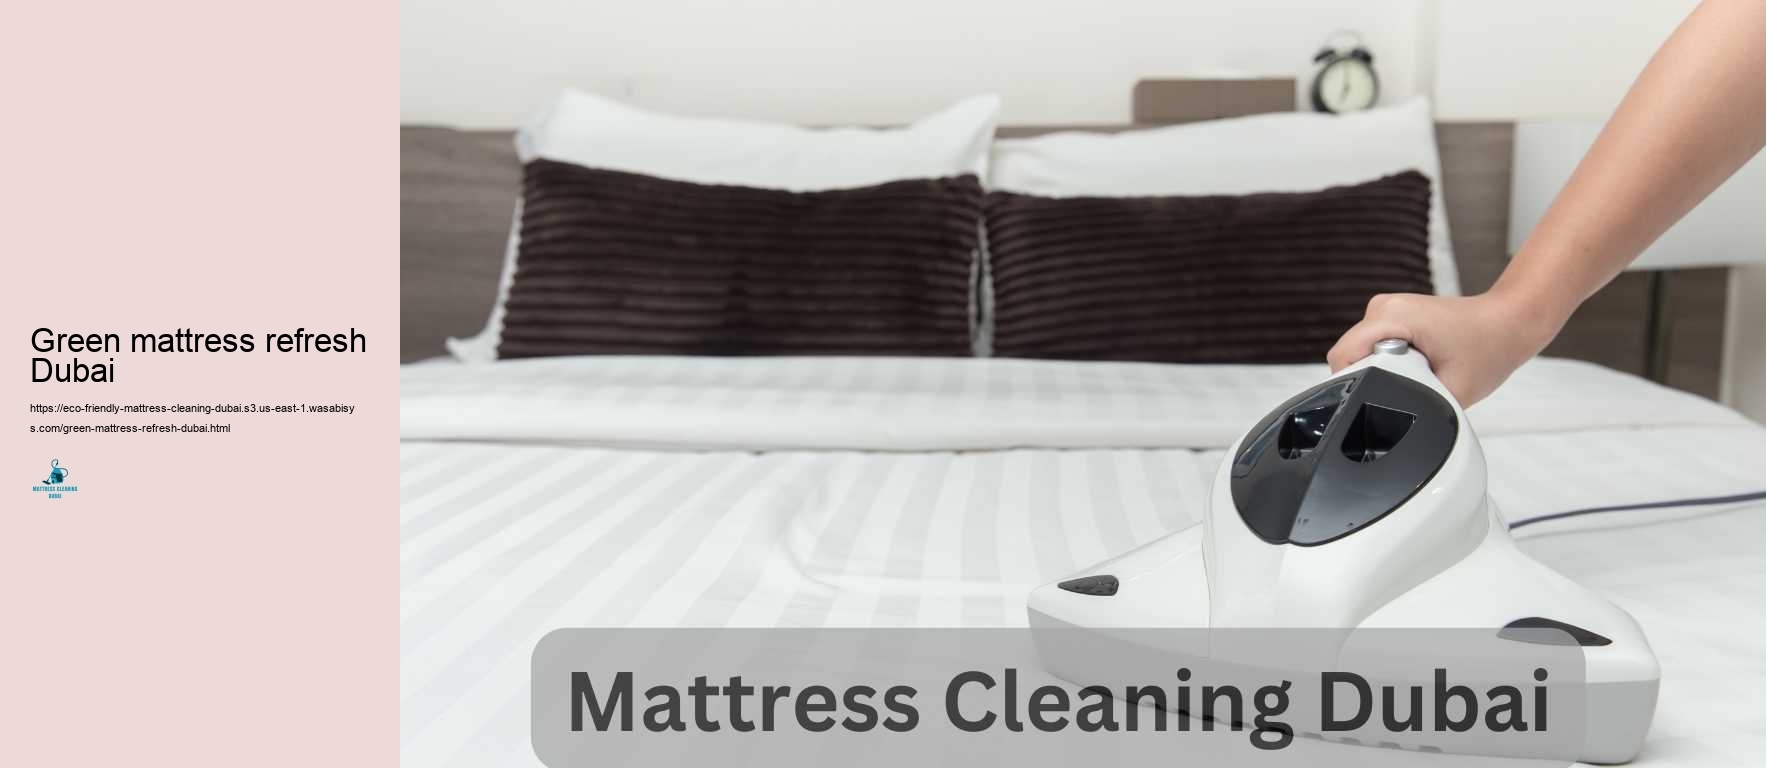 Green mattress refresh Dubai